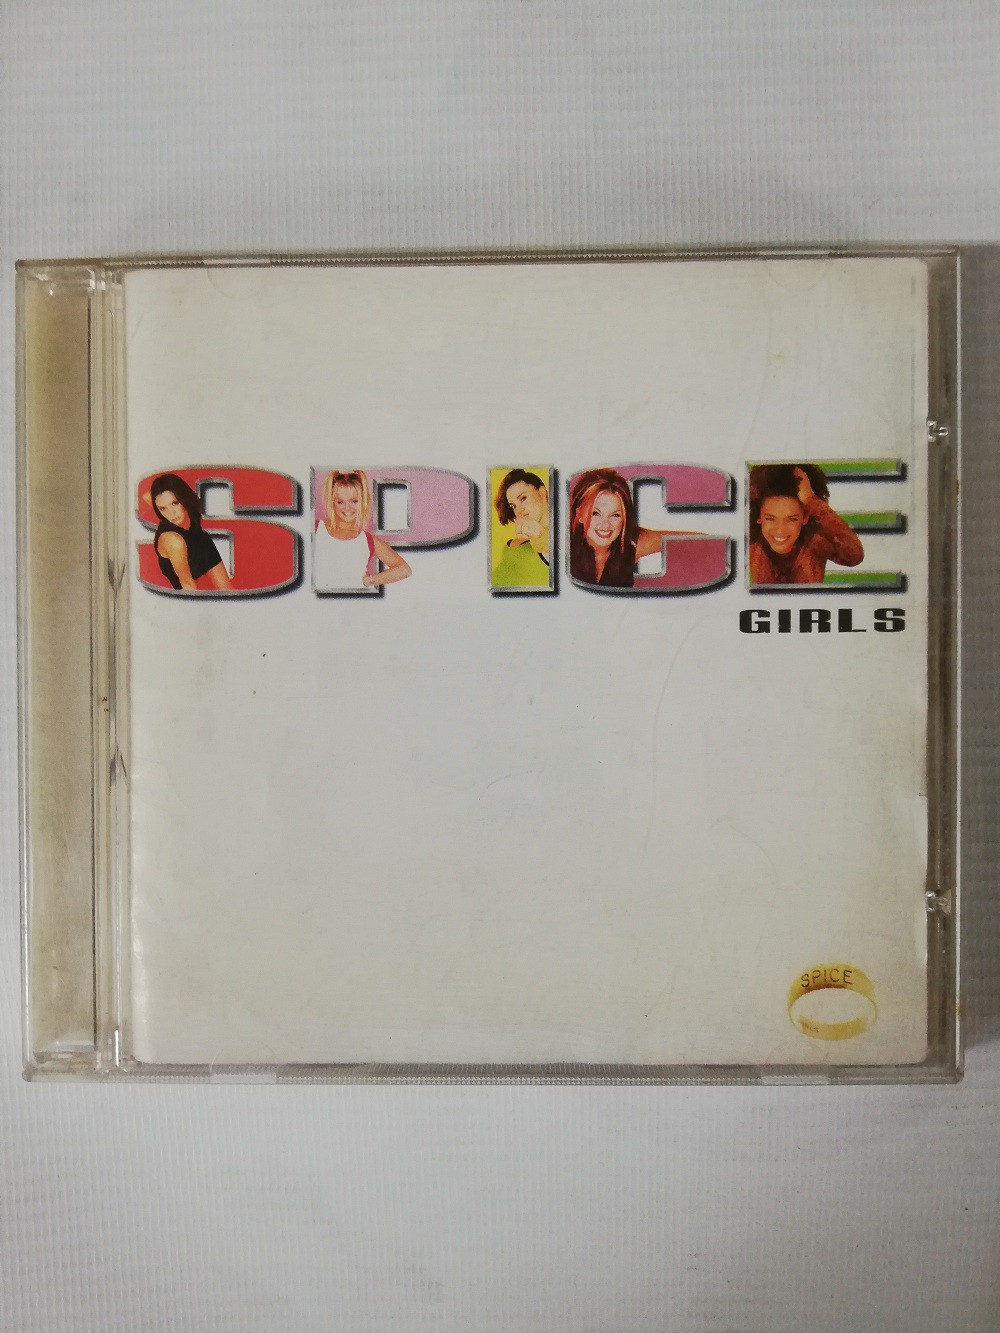 Imagen CD SPICE GIRLS - SPICE 1